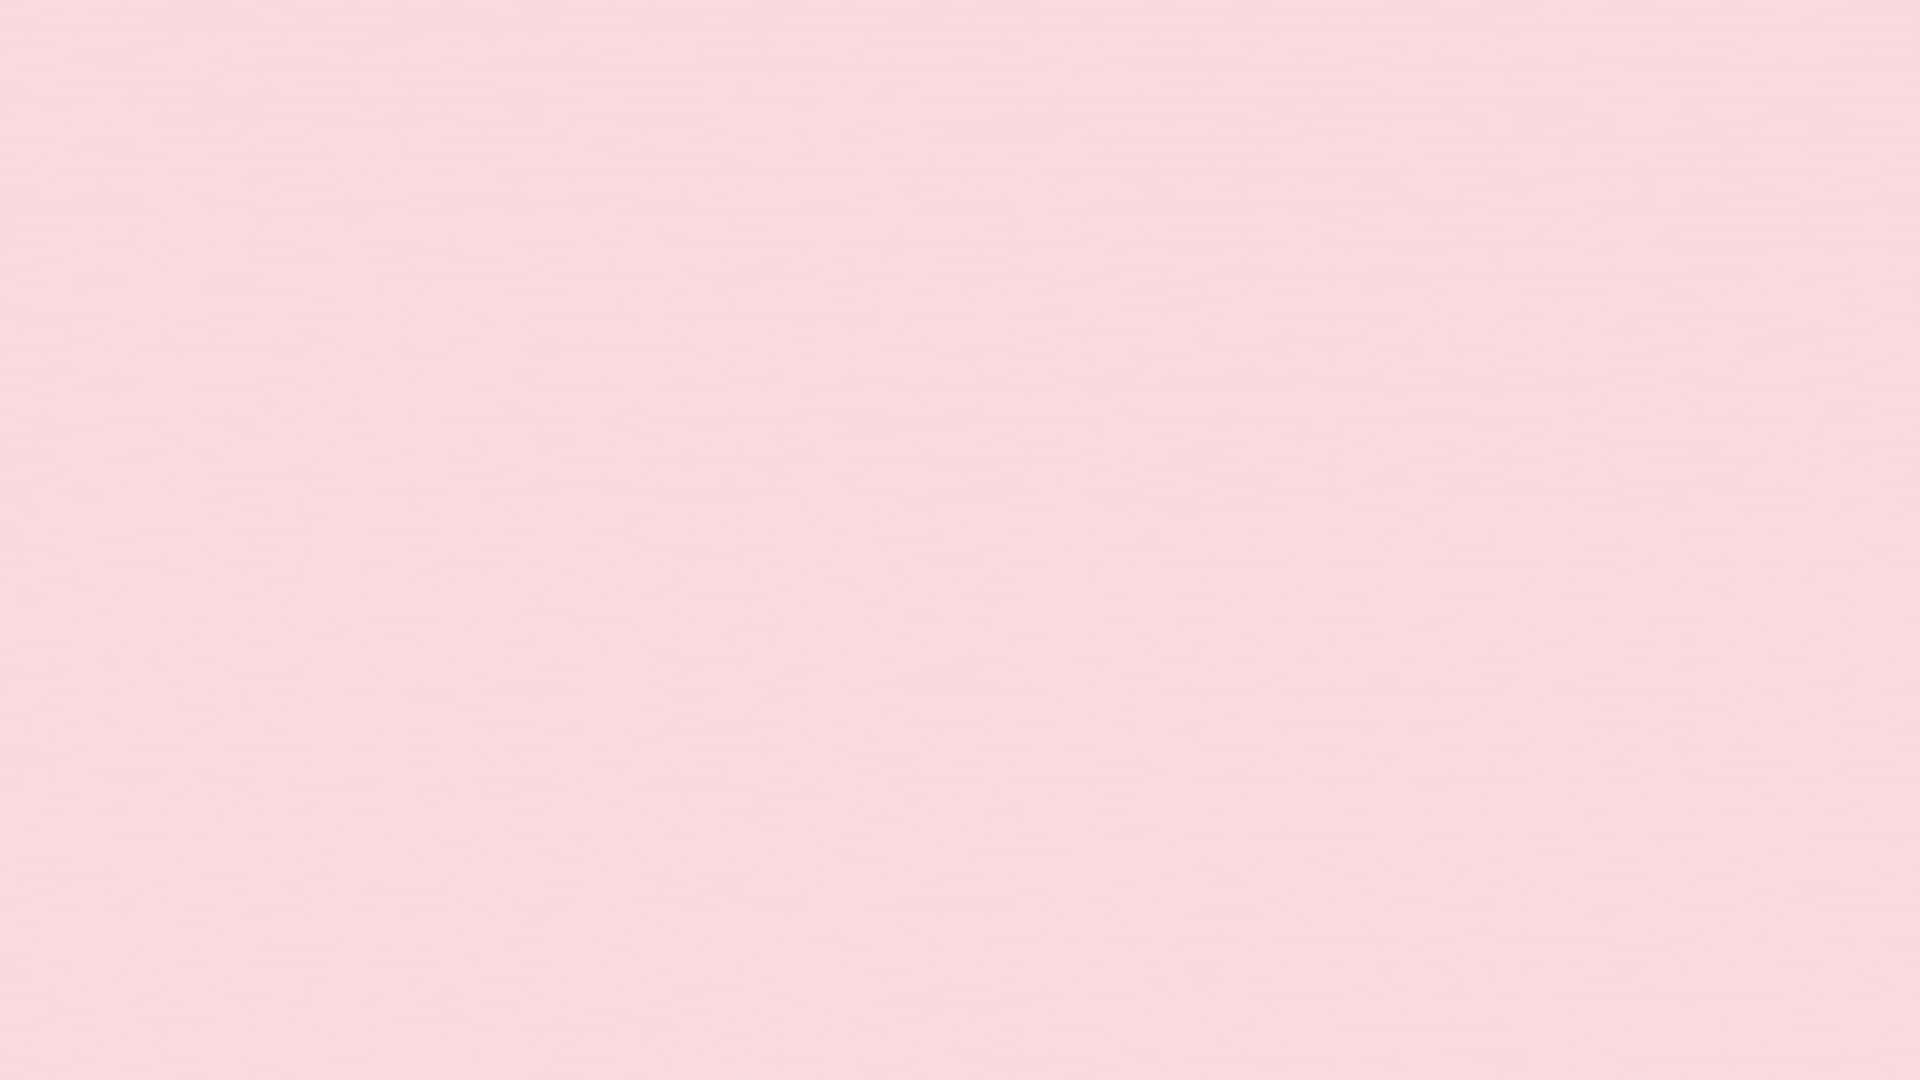 Lovely Solid Plain Light Pink Background